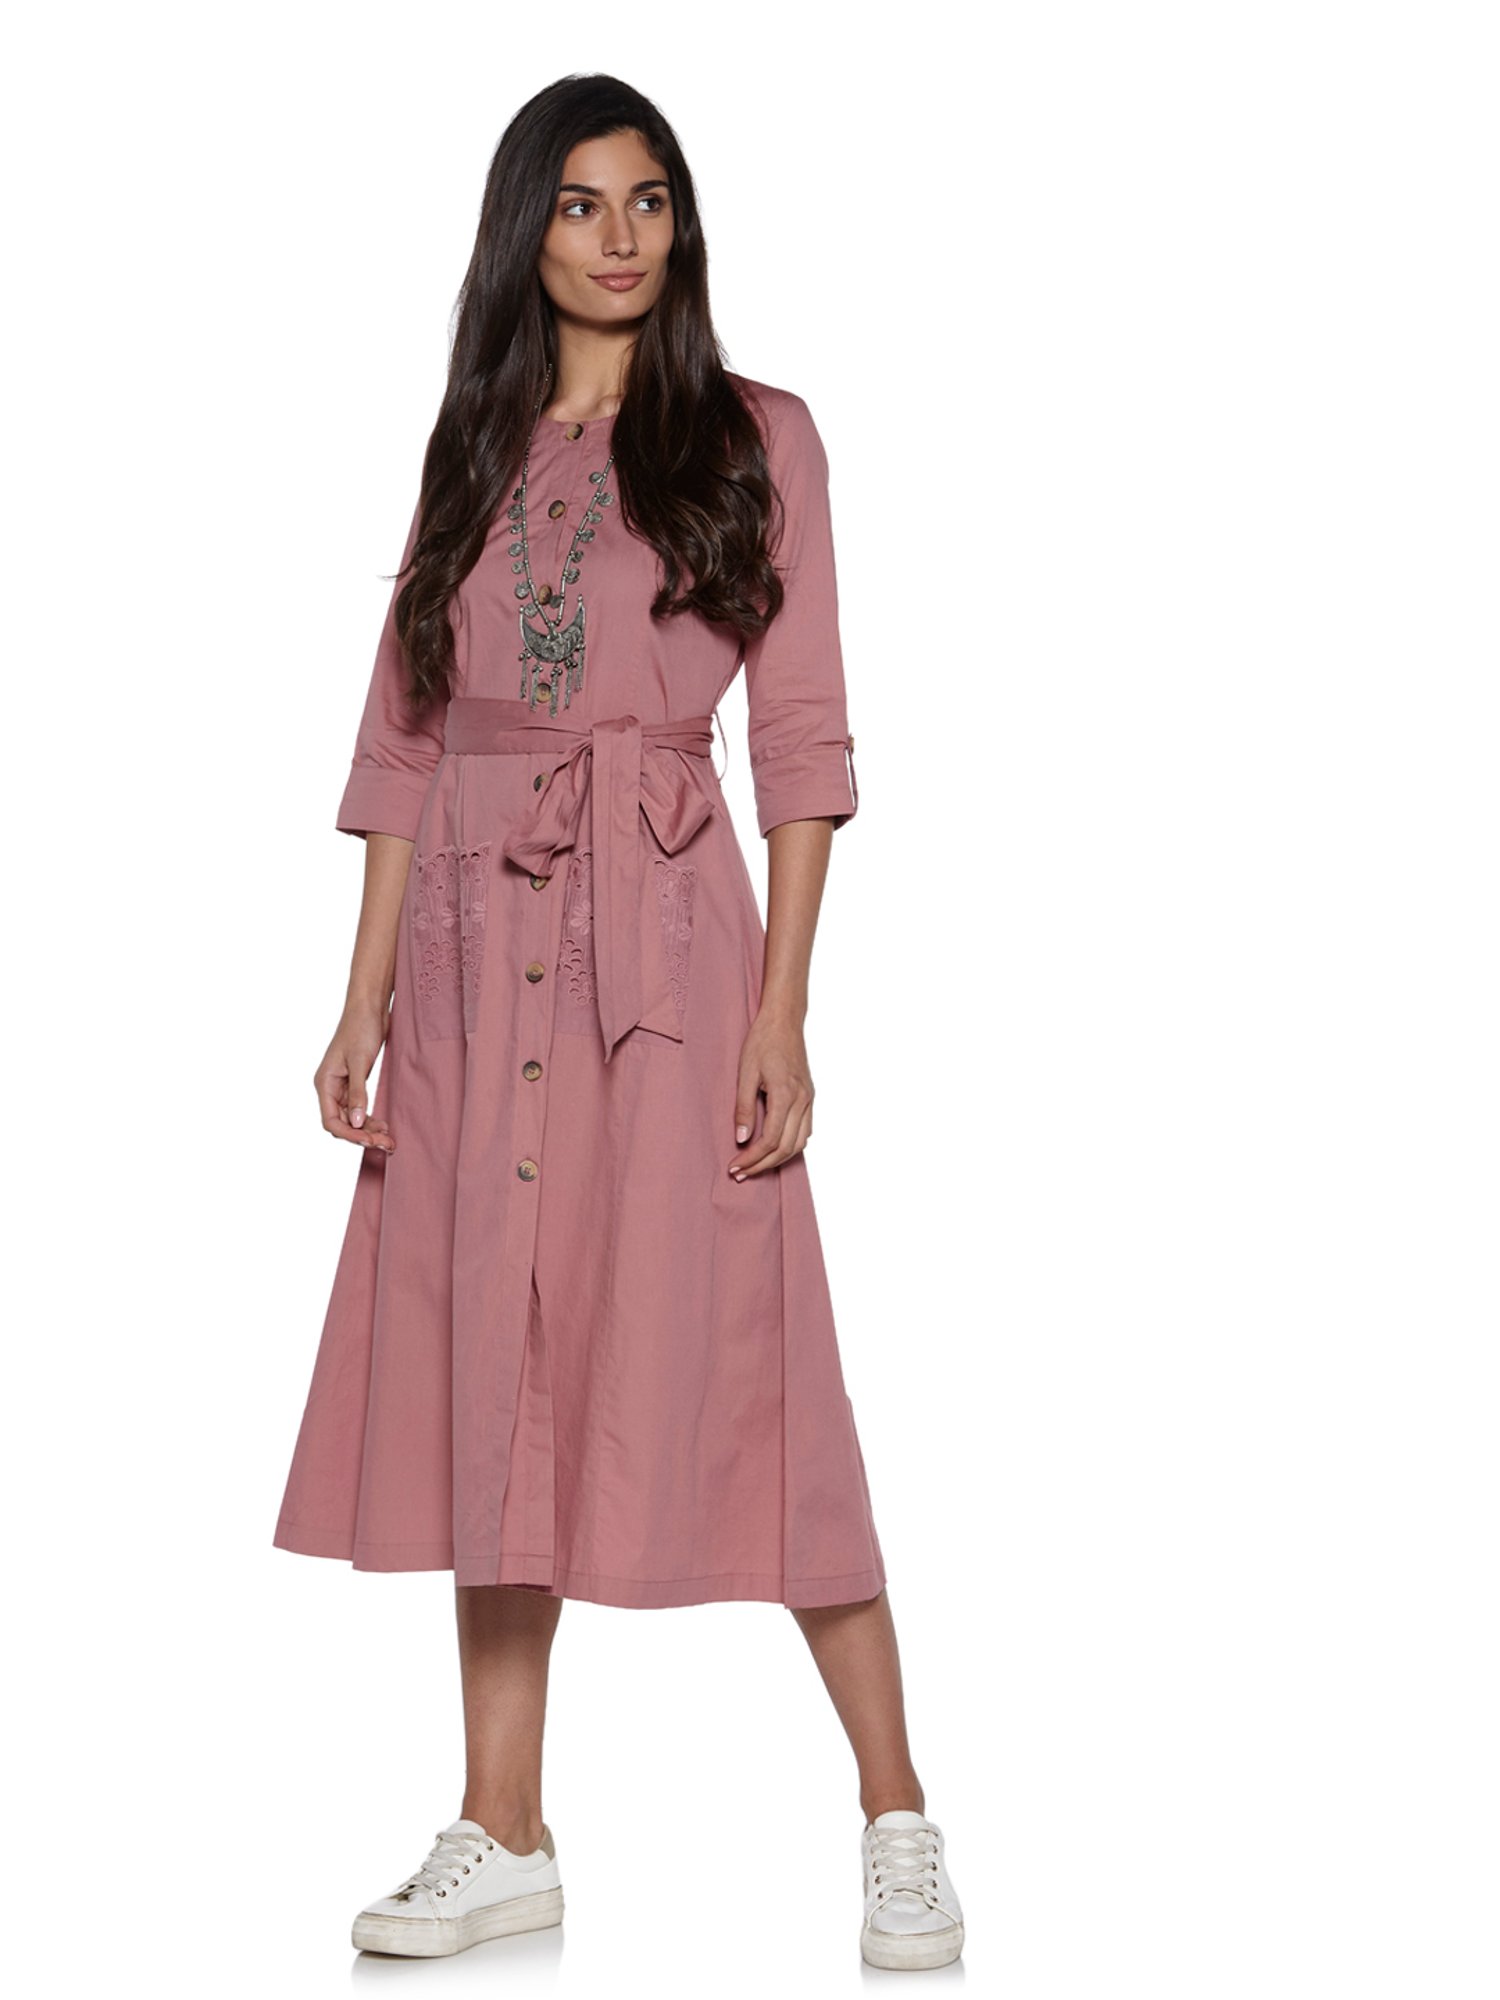 Bombay Paisley Printed Multi-Colored Dress – Cherrypick